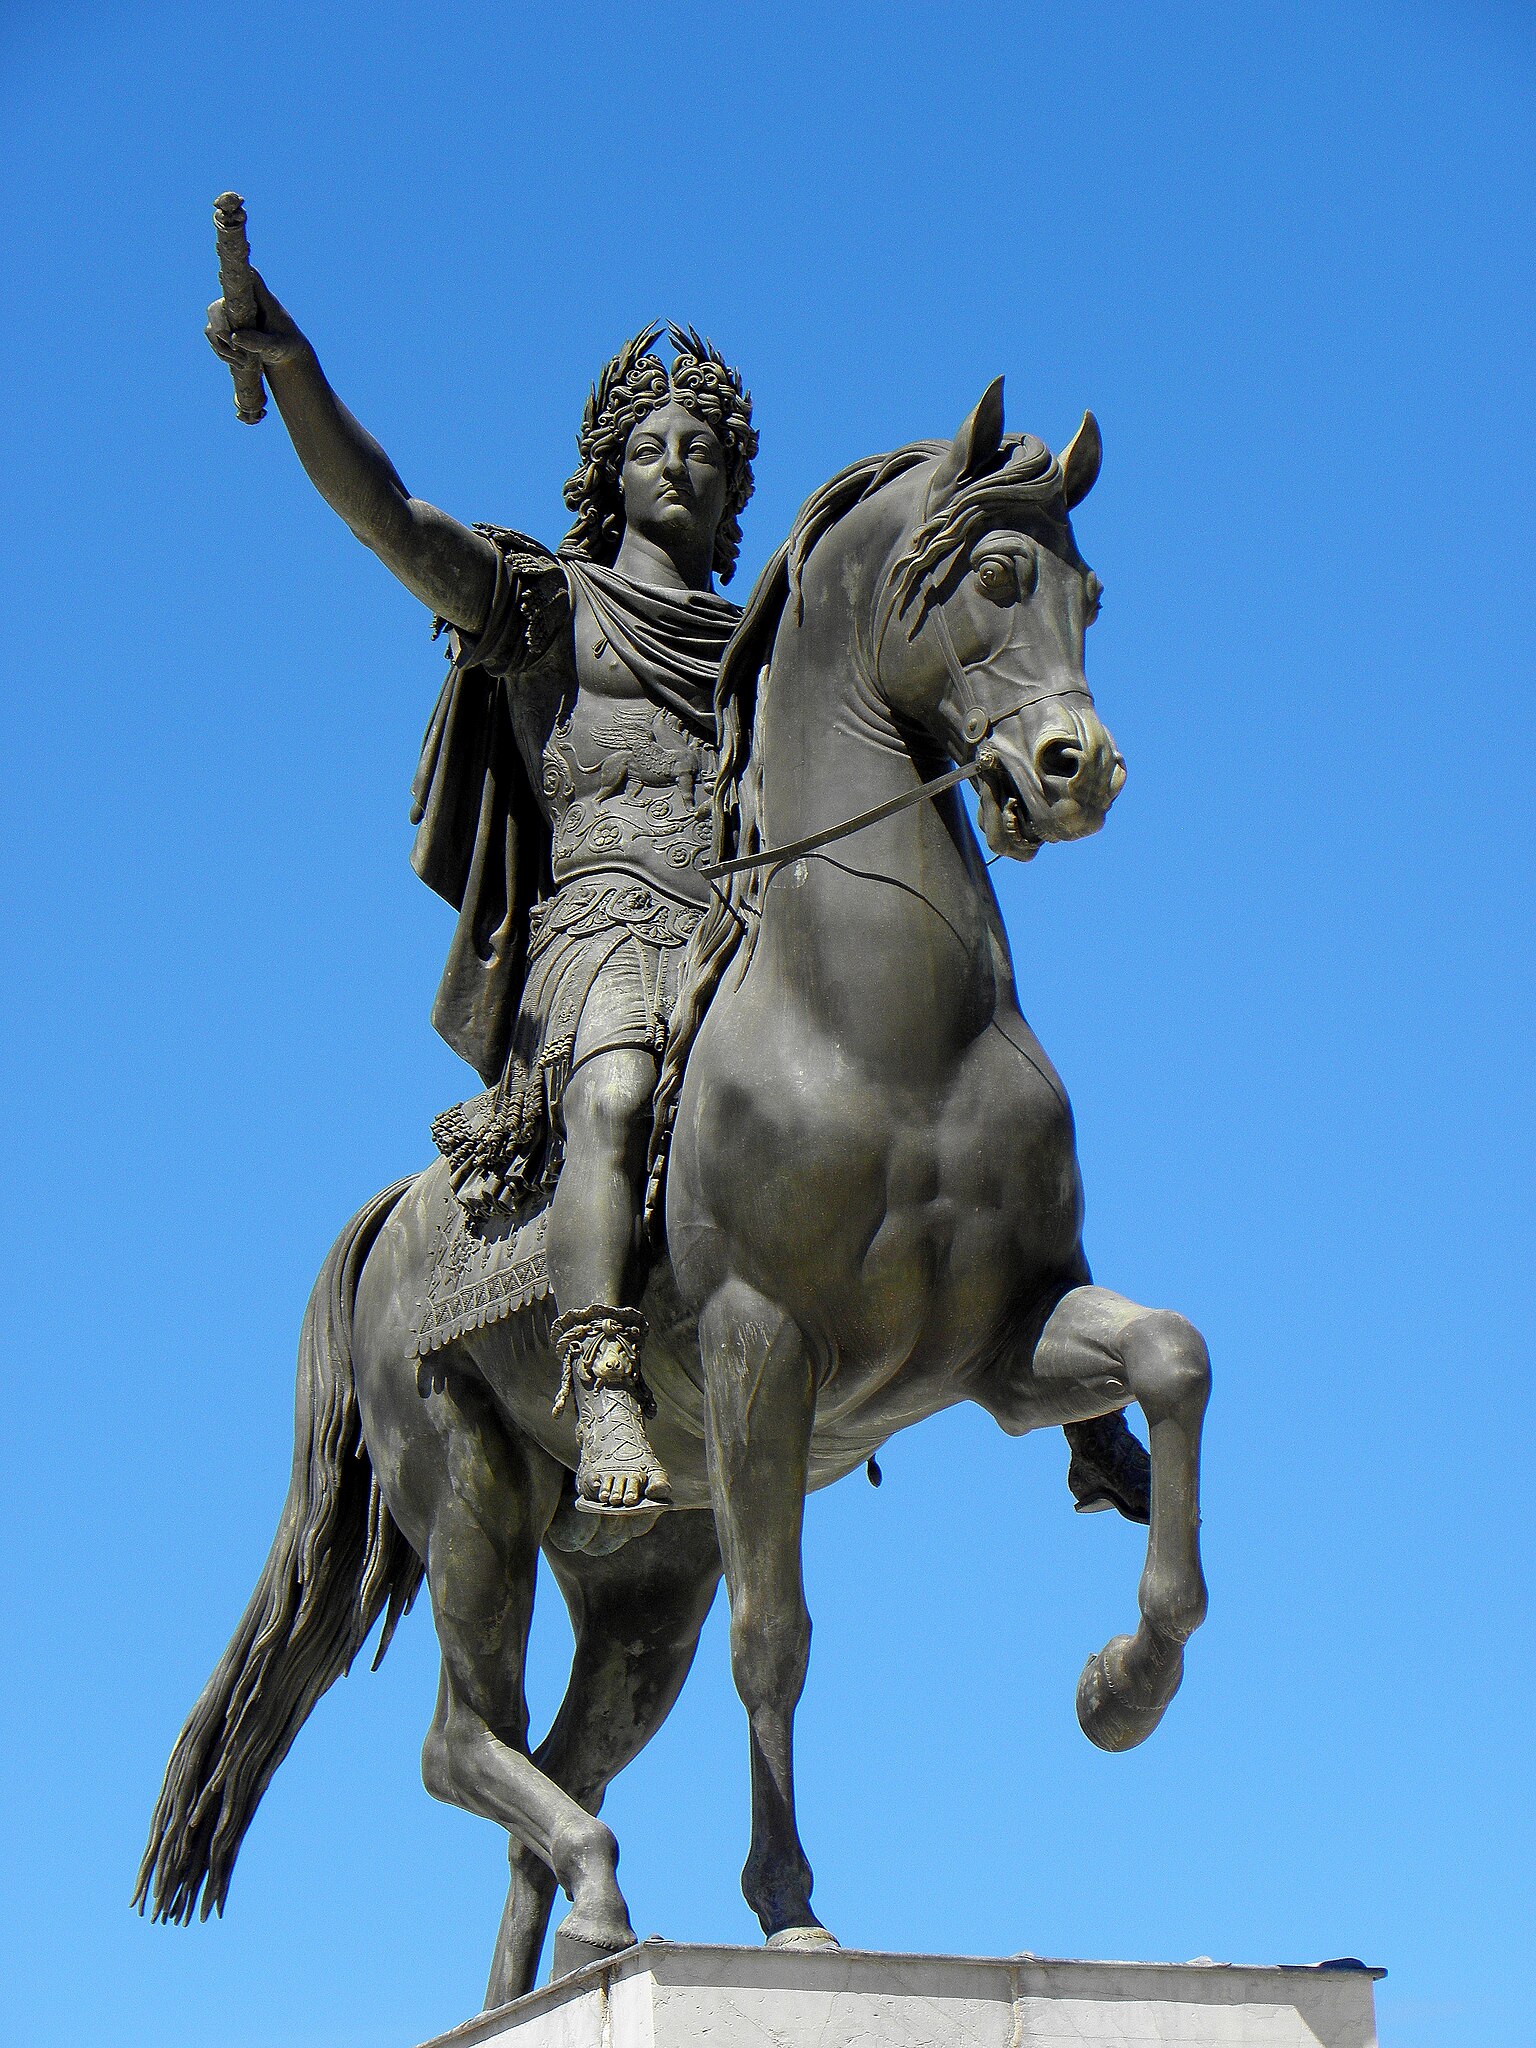 File:Louis XIV Equestrian Portrait.jpg - Wikipedia